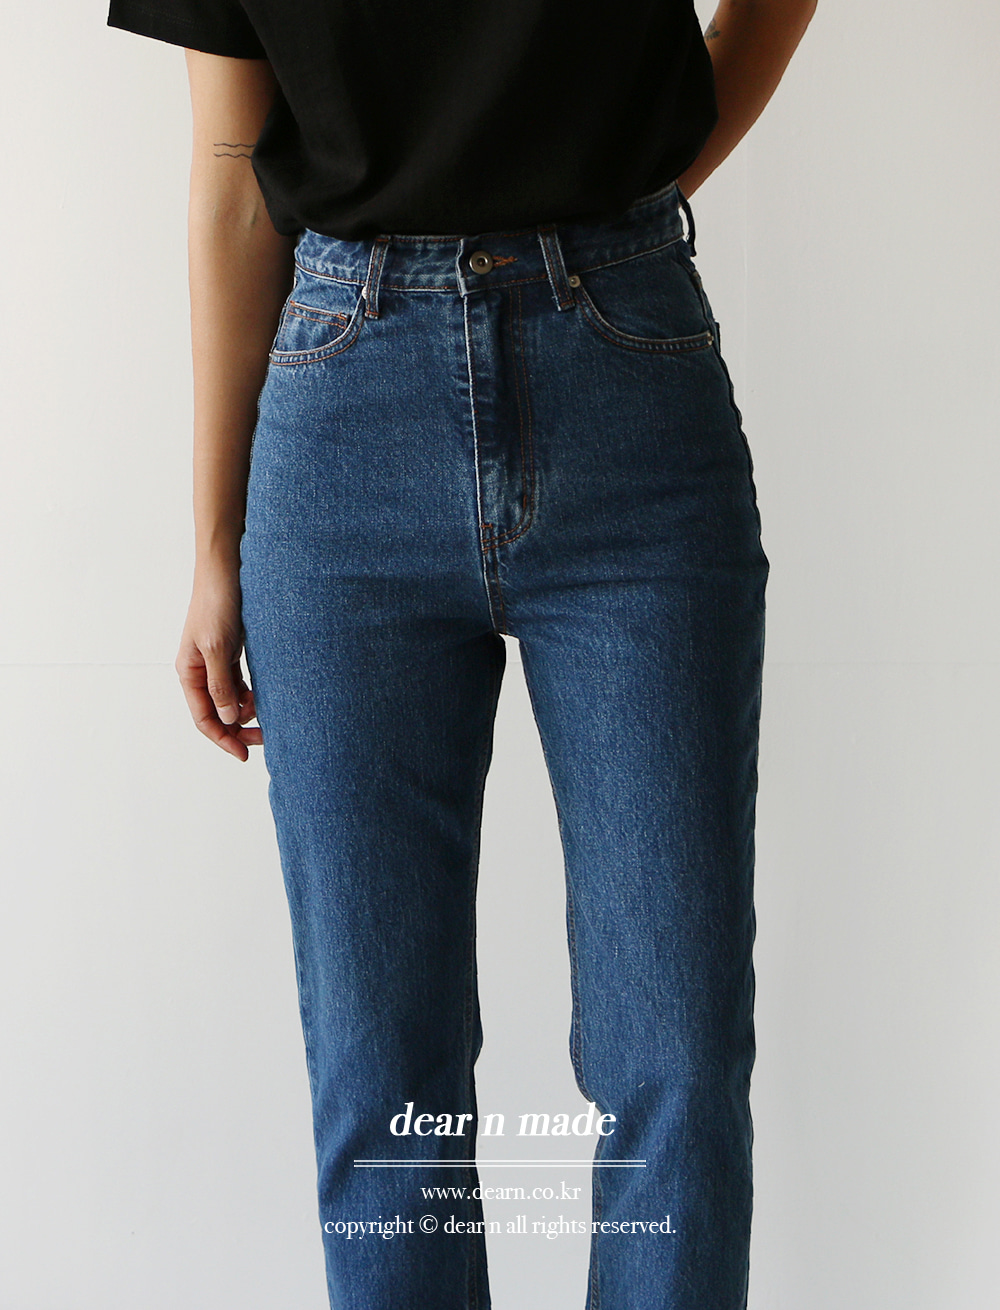 (dear n) alt deep blue jeans